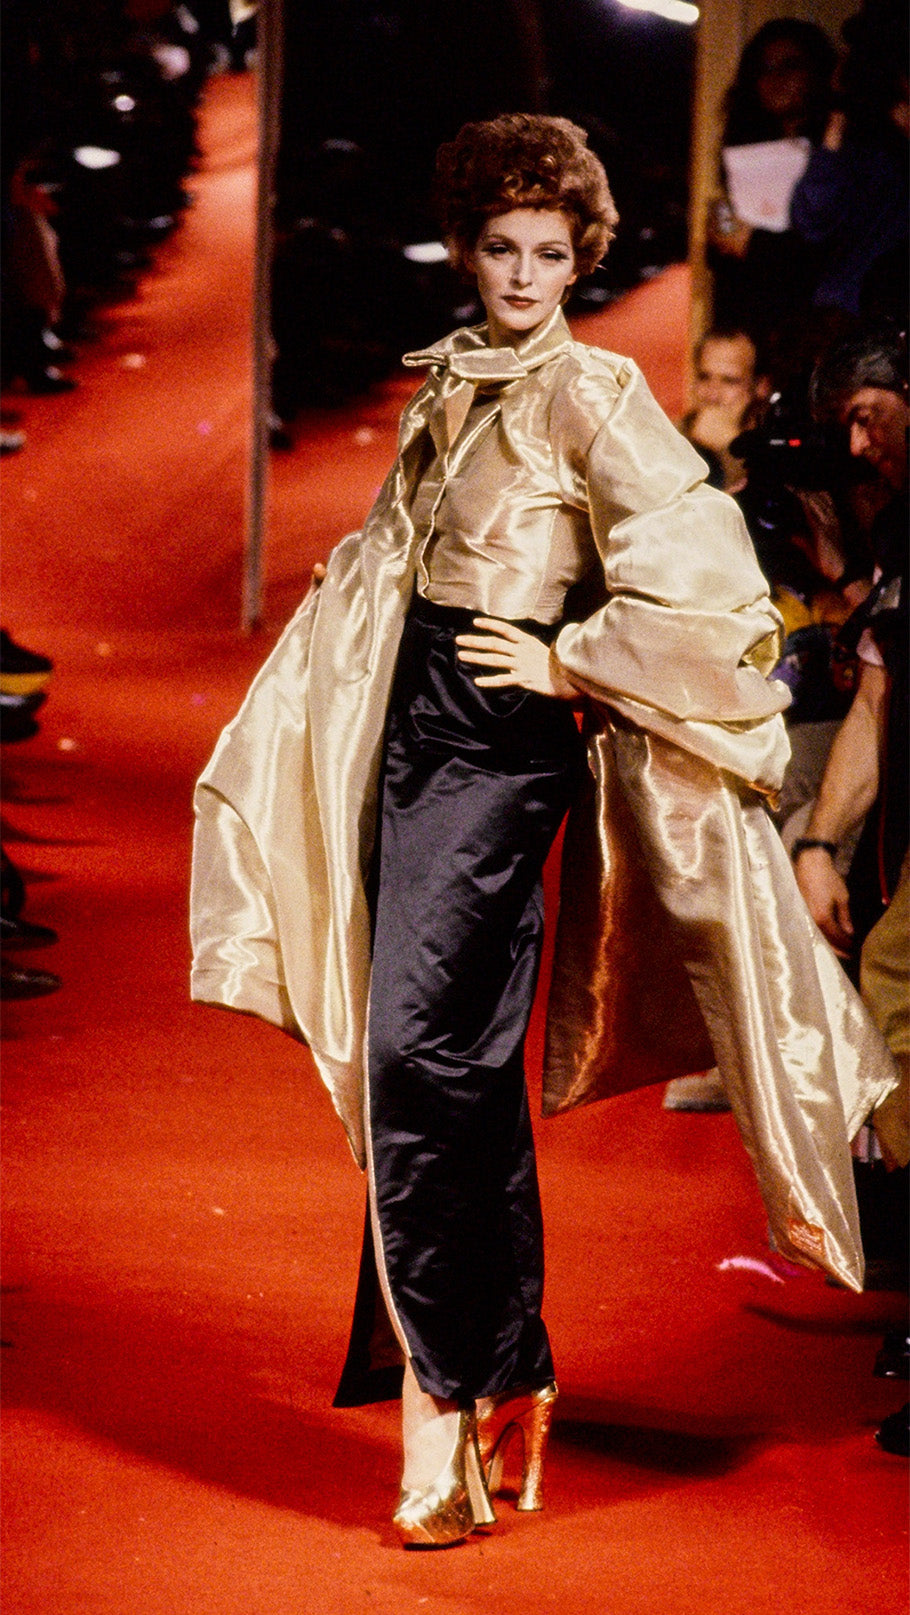 Vintage Vivienne Westwood 1993 F/W Metallic Gold Elevated Court Shoe on runway model @recessla